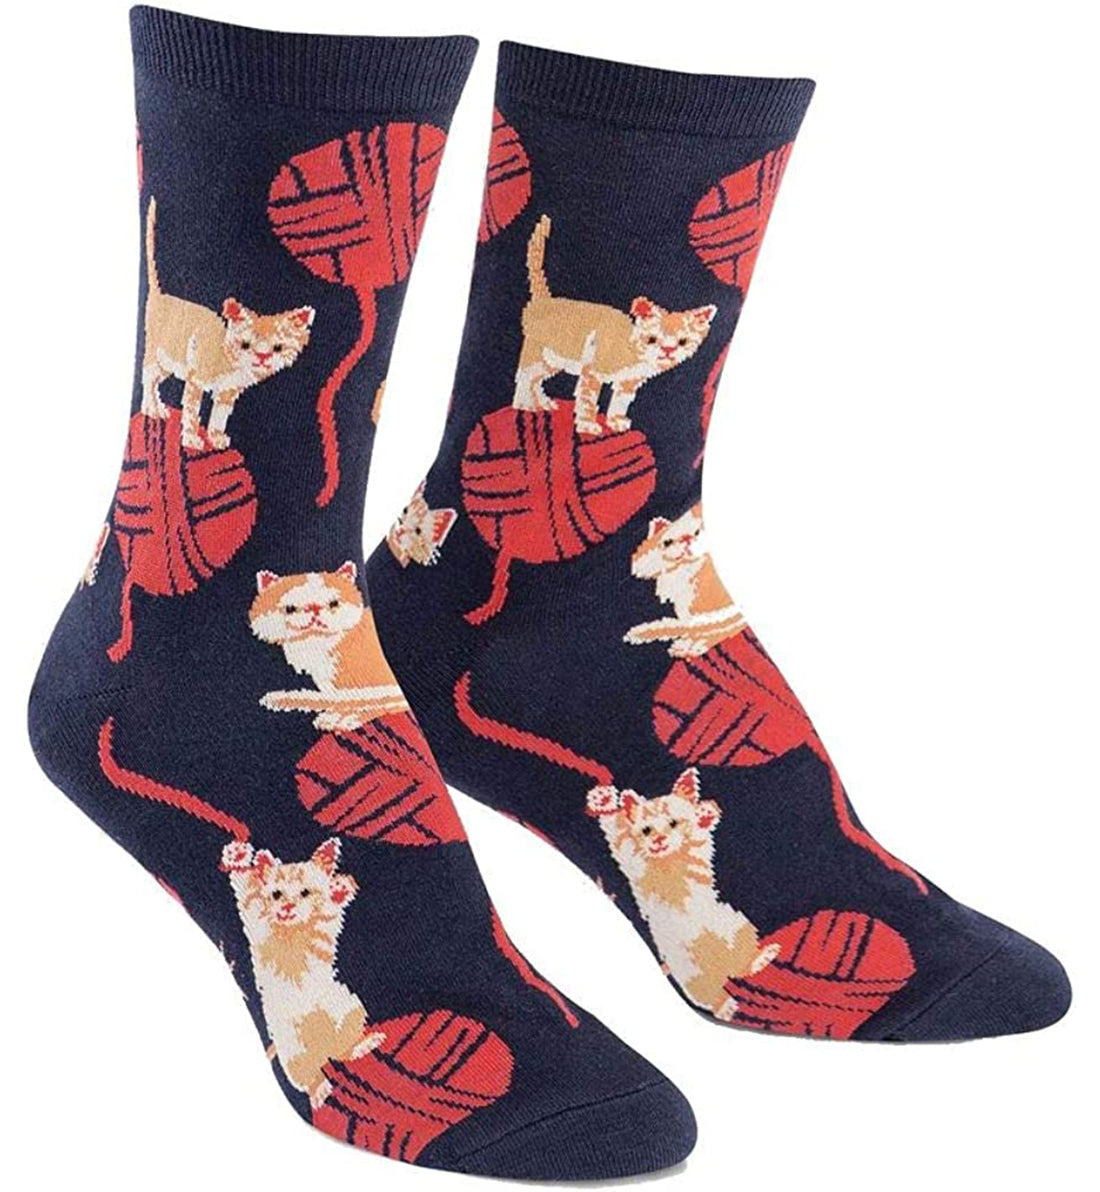 SOCK it to me Women's Crew Socks (w0079),Kitten Knittin' - Kitten Knittin',One Size